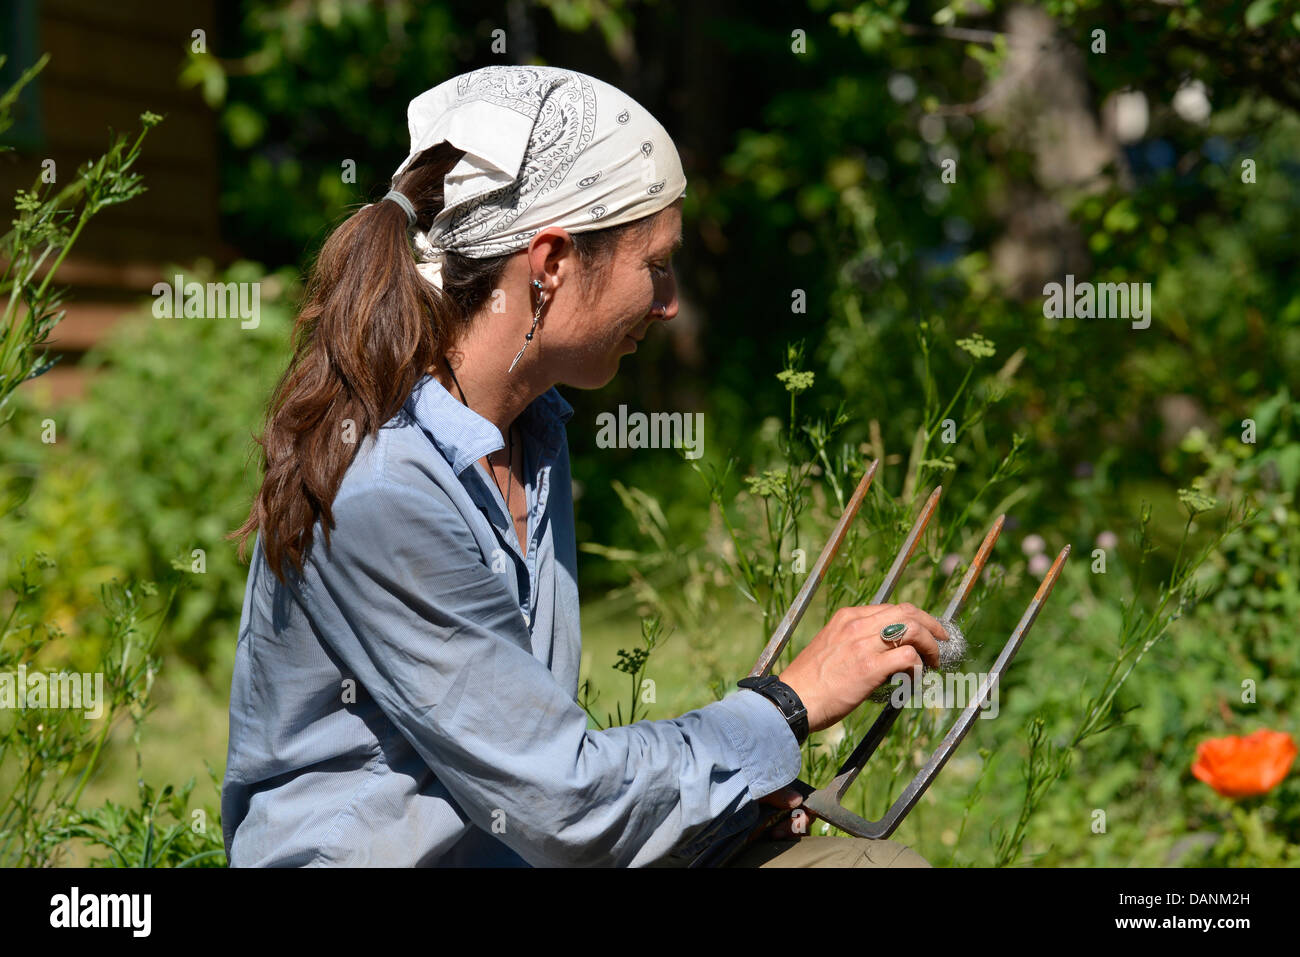 Gardener using steel wool to clean rust of a garden tool in Oregon's Wallowa Valley. Stock Photo